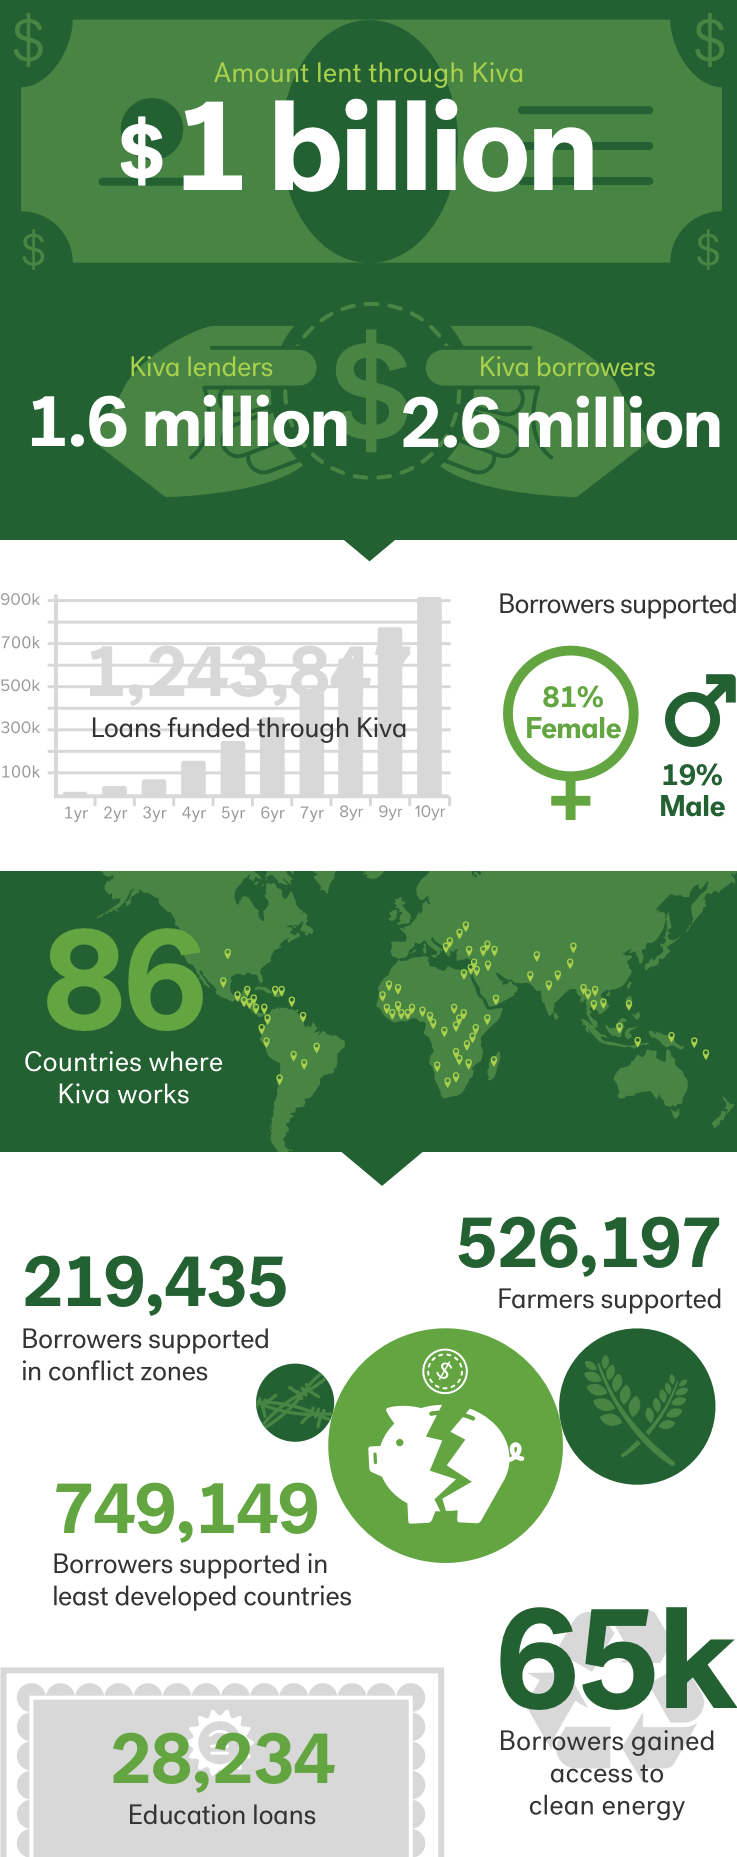 info-graphic of kiva.org statistics